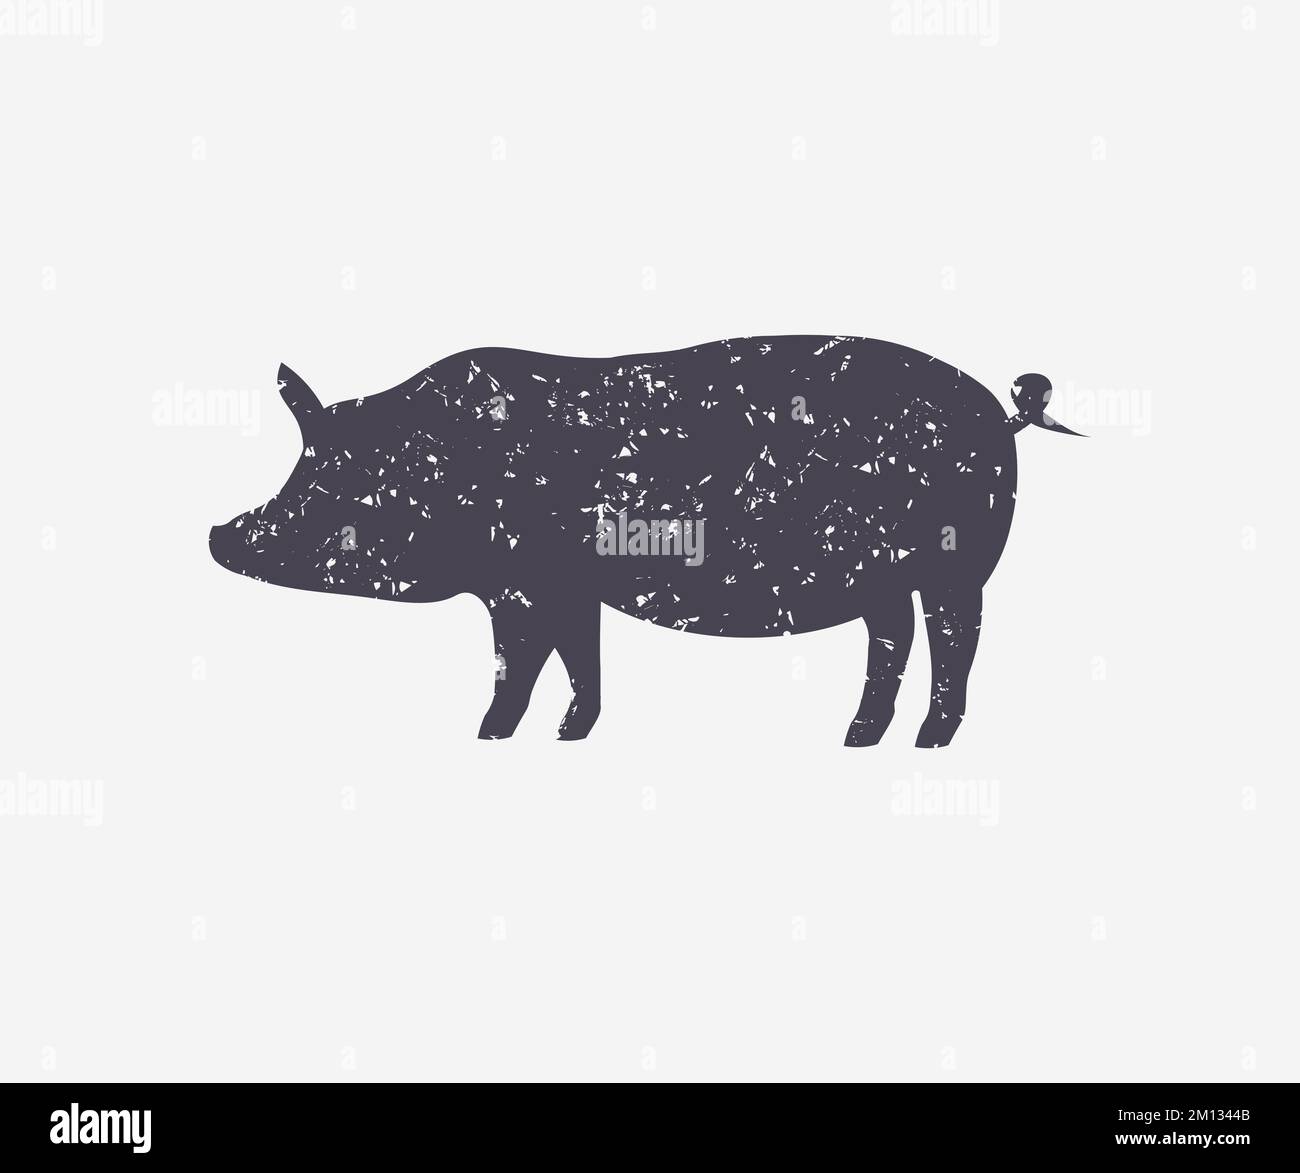 Pig grunge silhouette for meat industry or farmers market logo design. Pork emblem for butcher shop, restaurant, steak house, barbecue design vector. Stock Vector